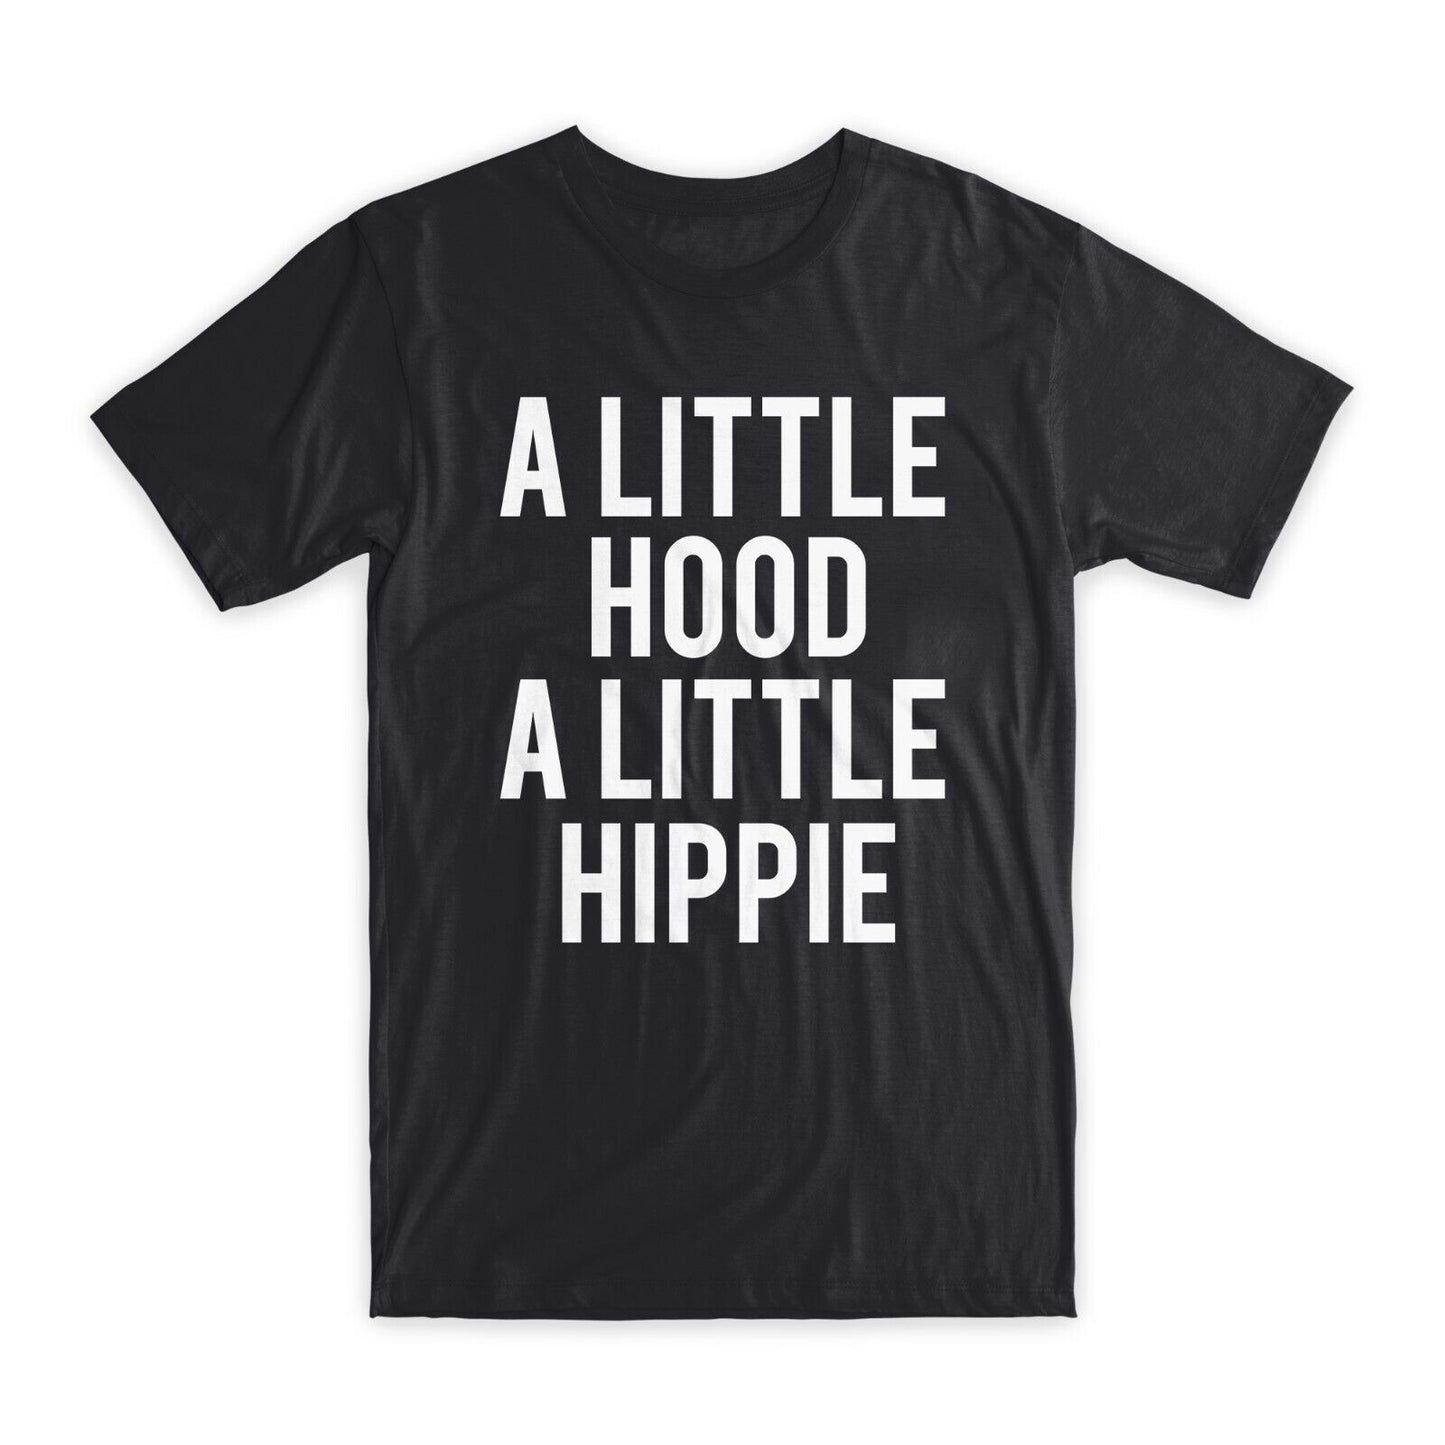 A Little Hood A Little Hippie T-Shirt Premium Soft Cotton Funny Tees Gifts NEW